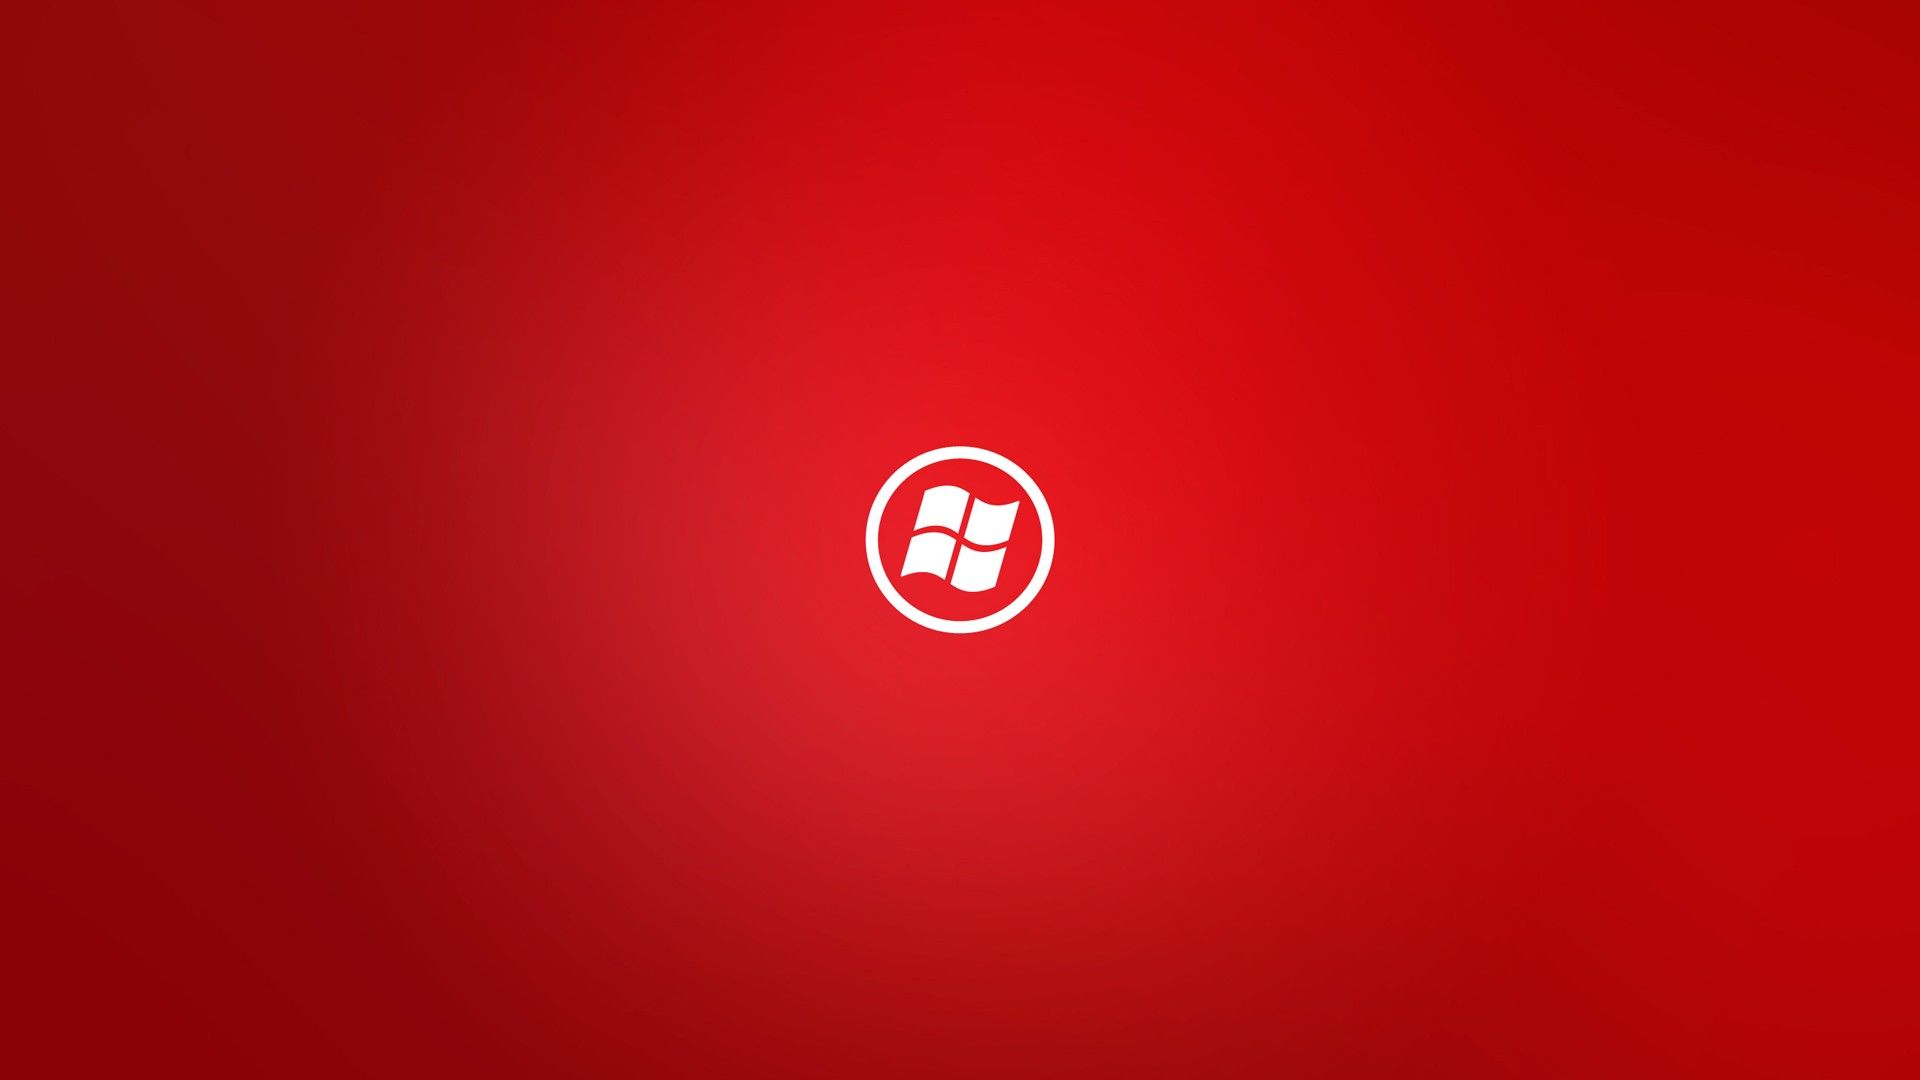 Red Windows Wallpaper -themes.com